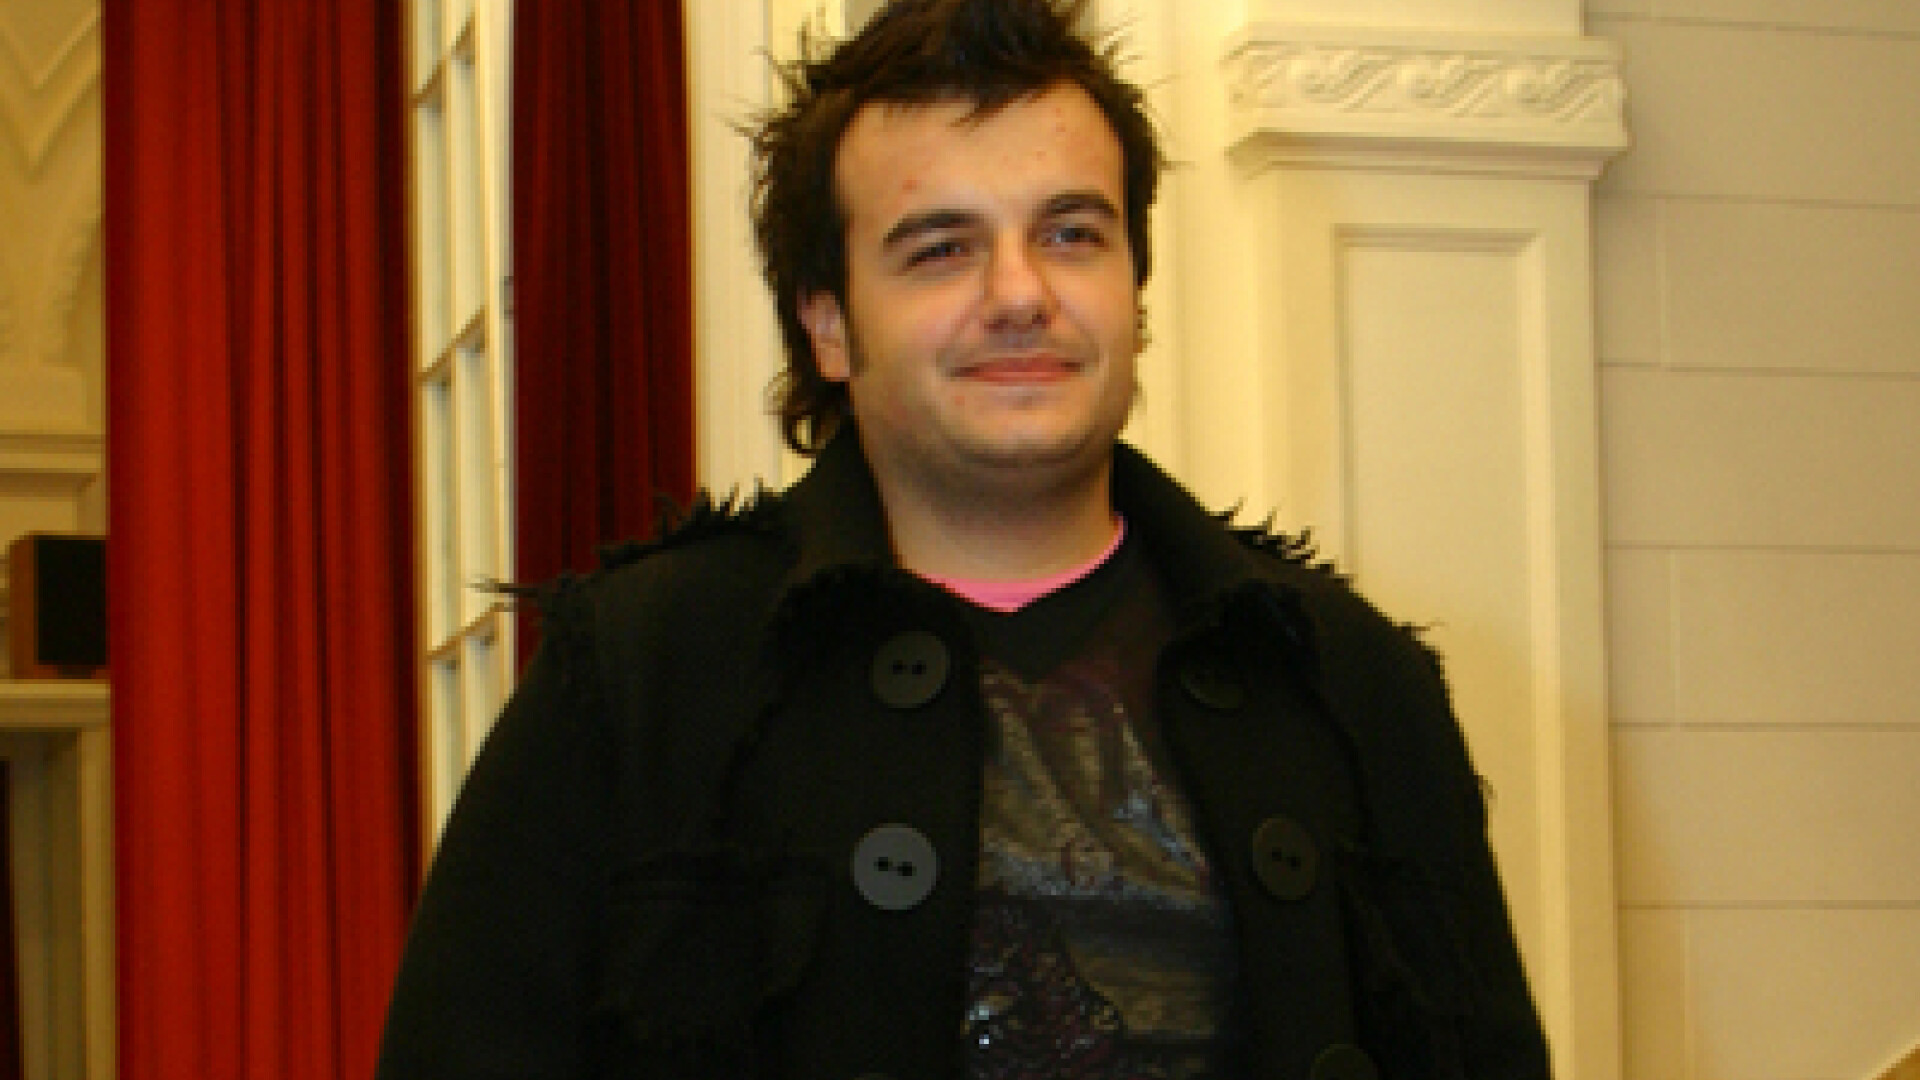 Razvan Ciobanu